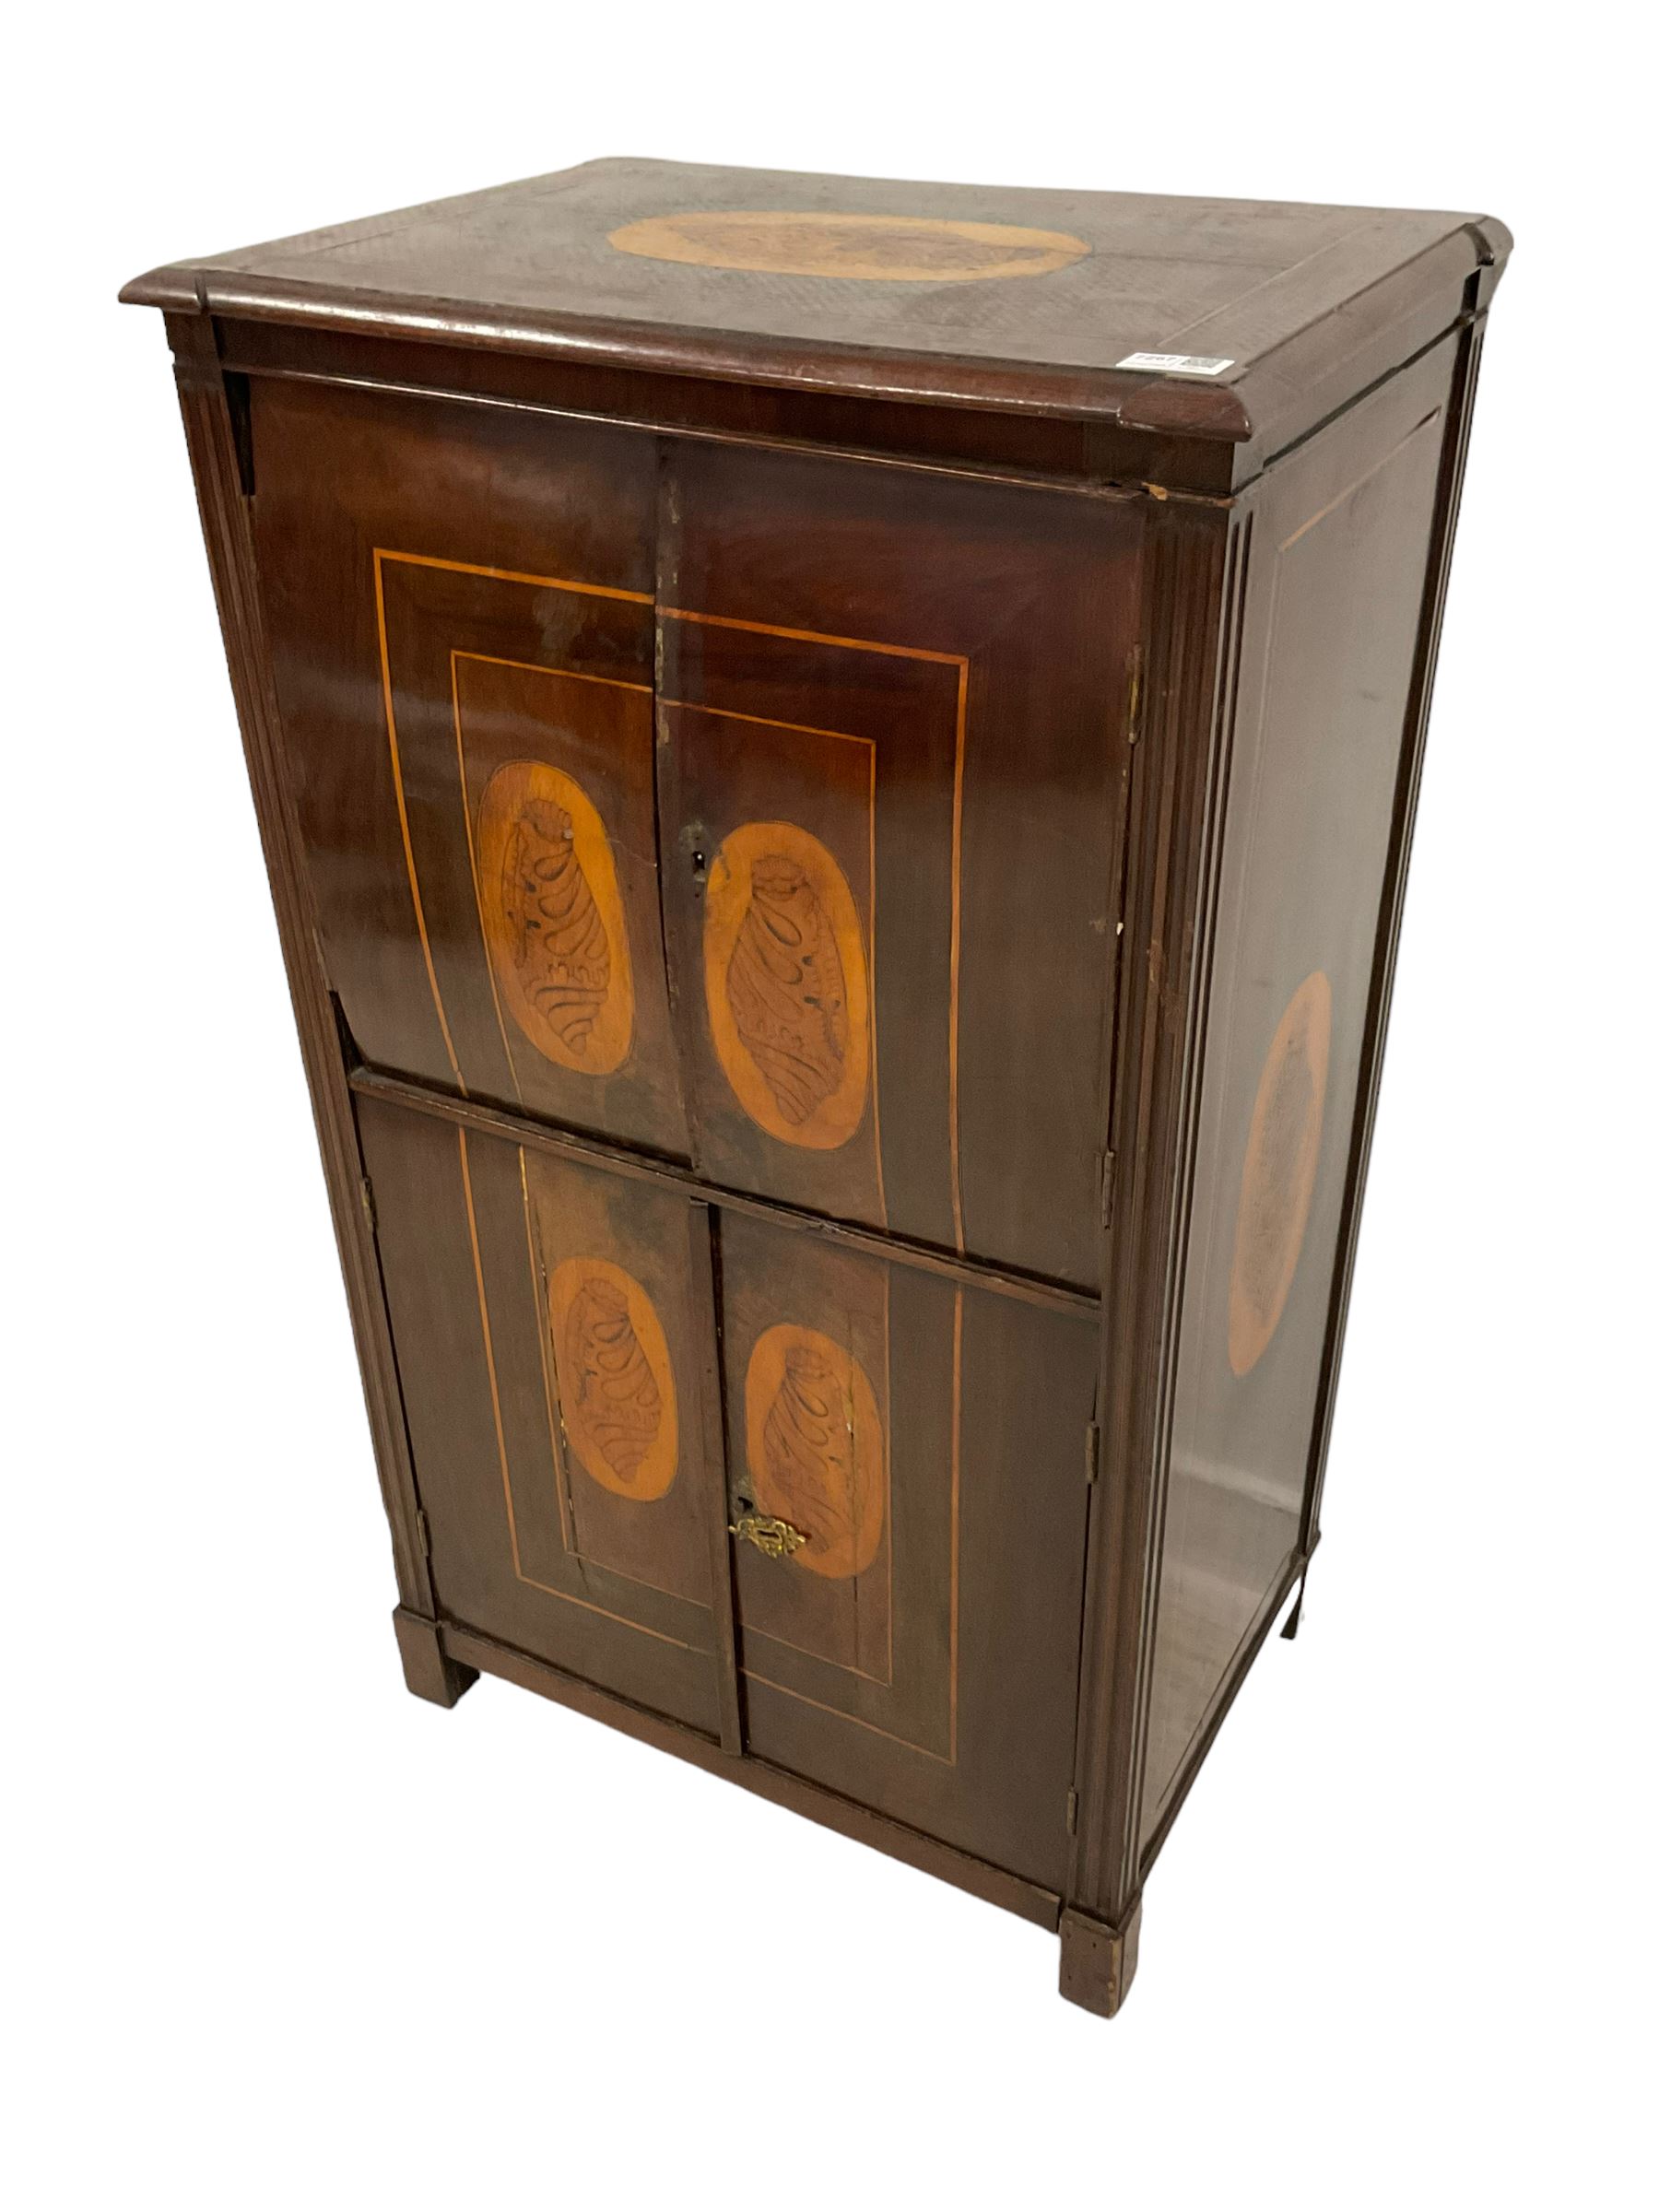 19th century inlaid mahogany cupboard - Image 2 of 6